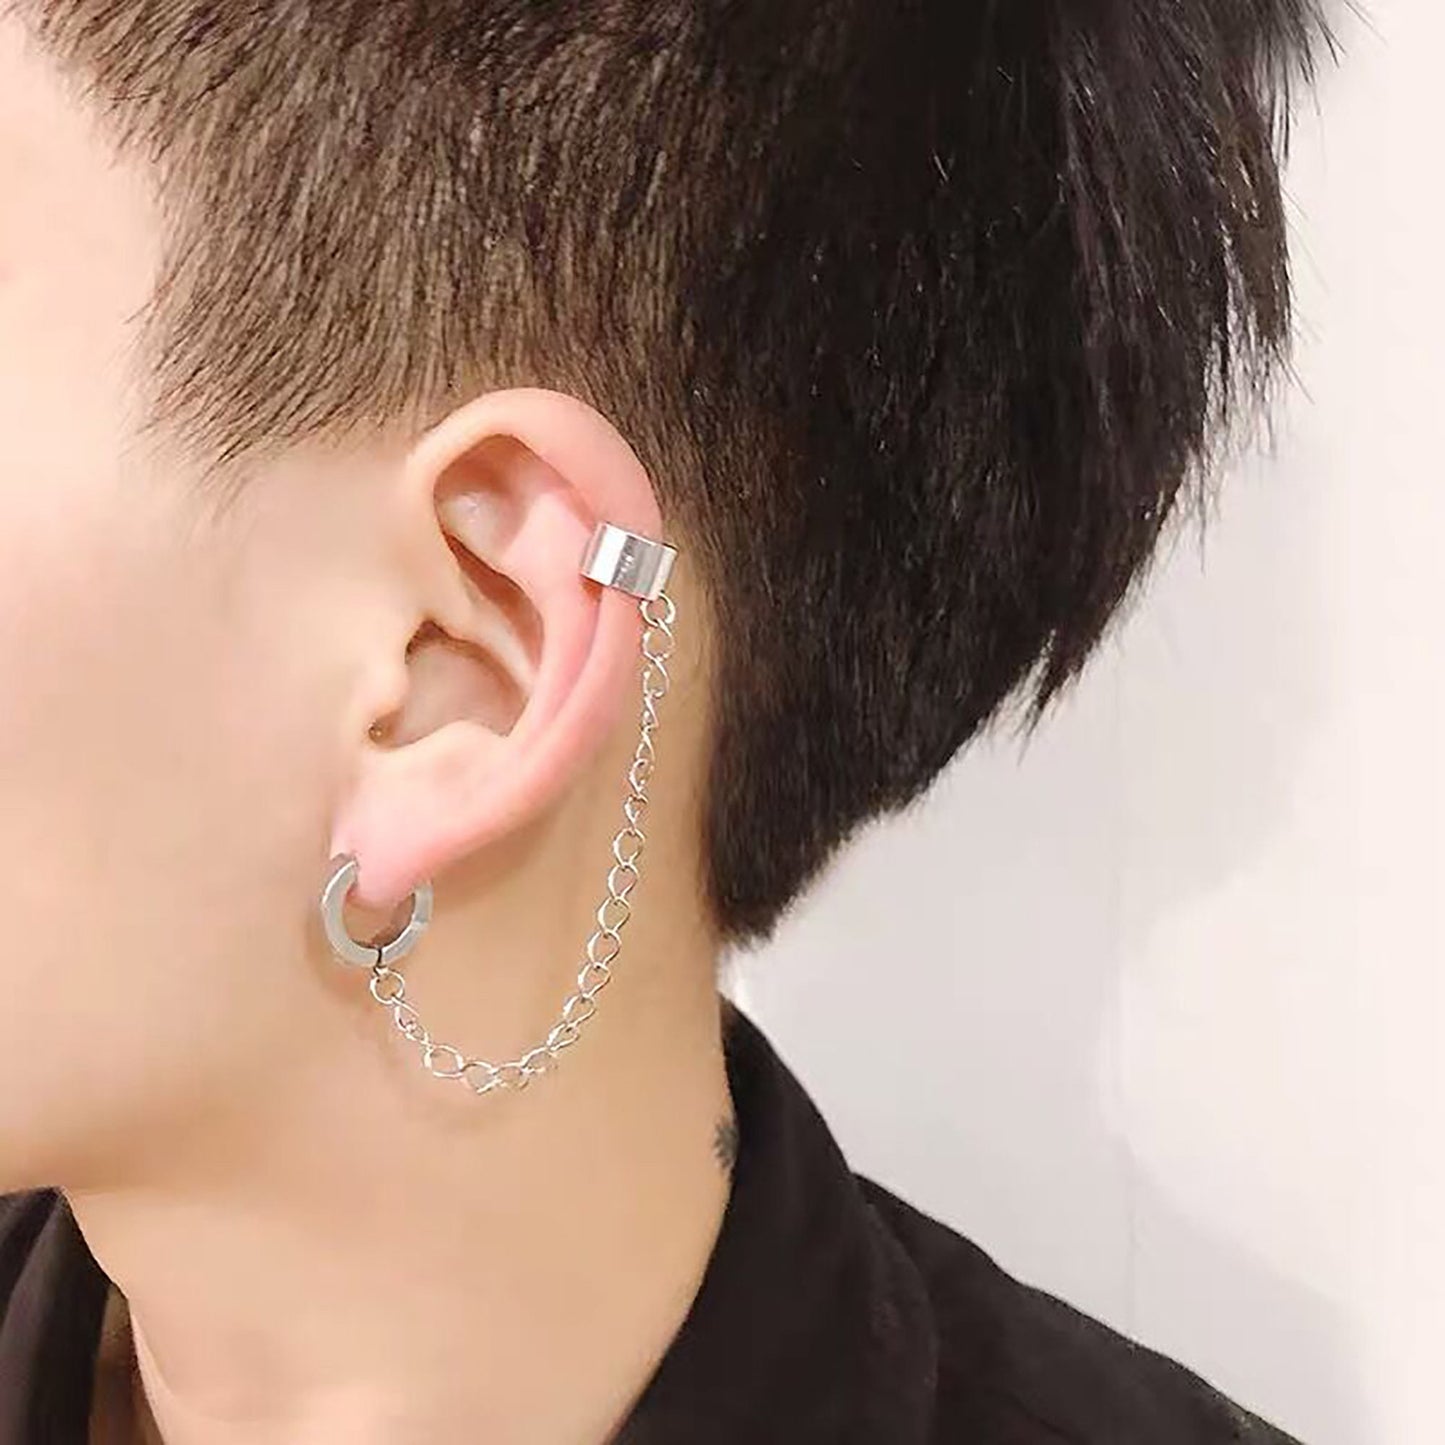 Titanium No Pierced Ear Clip 1 Piece, Non Tarnish Earrings, Implant Grade Titanium Waterproof Earrings, Men Earrings, Minimal Earrings